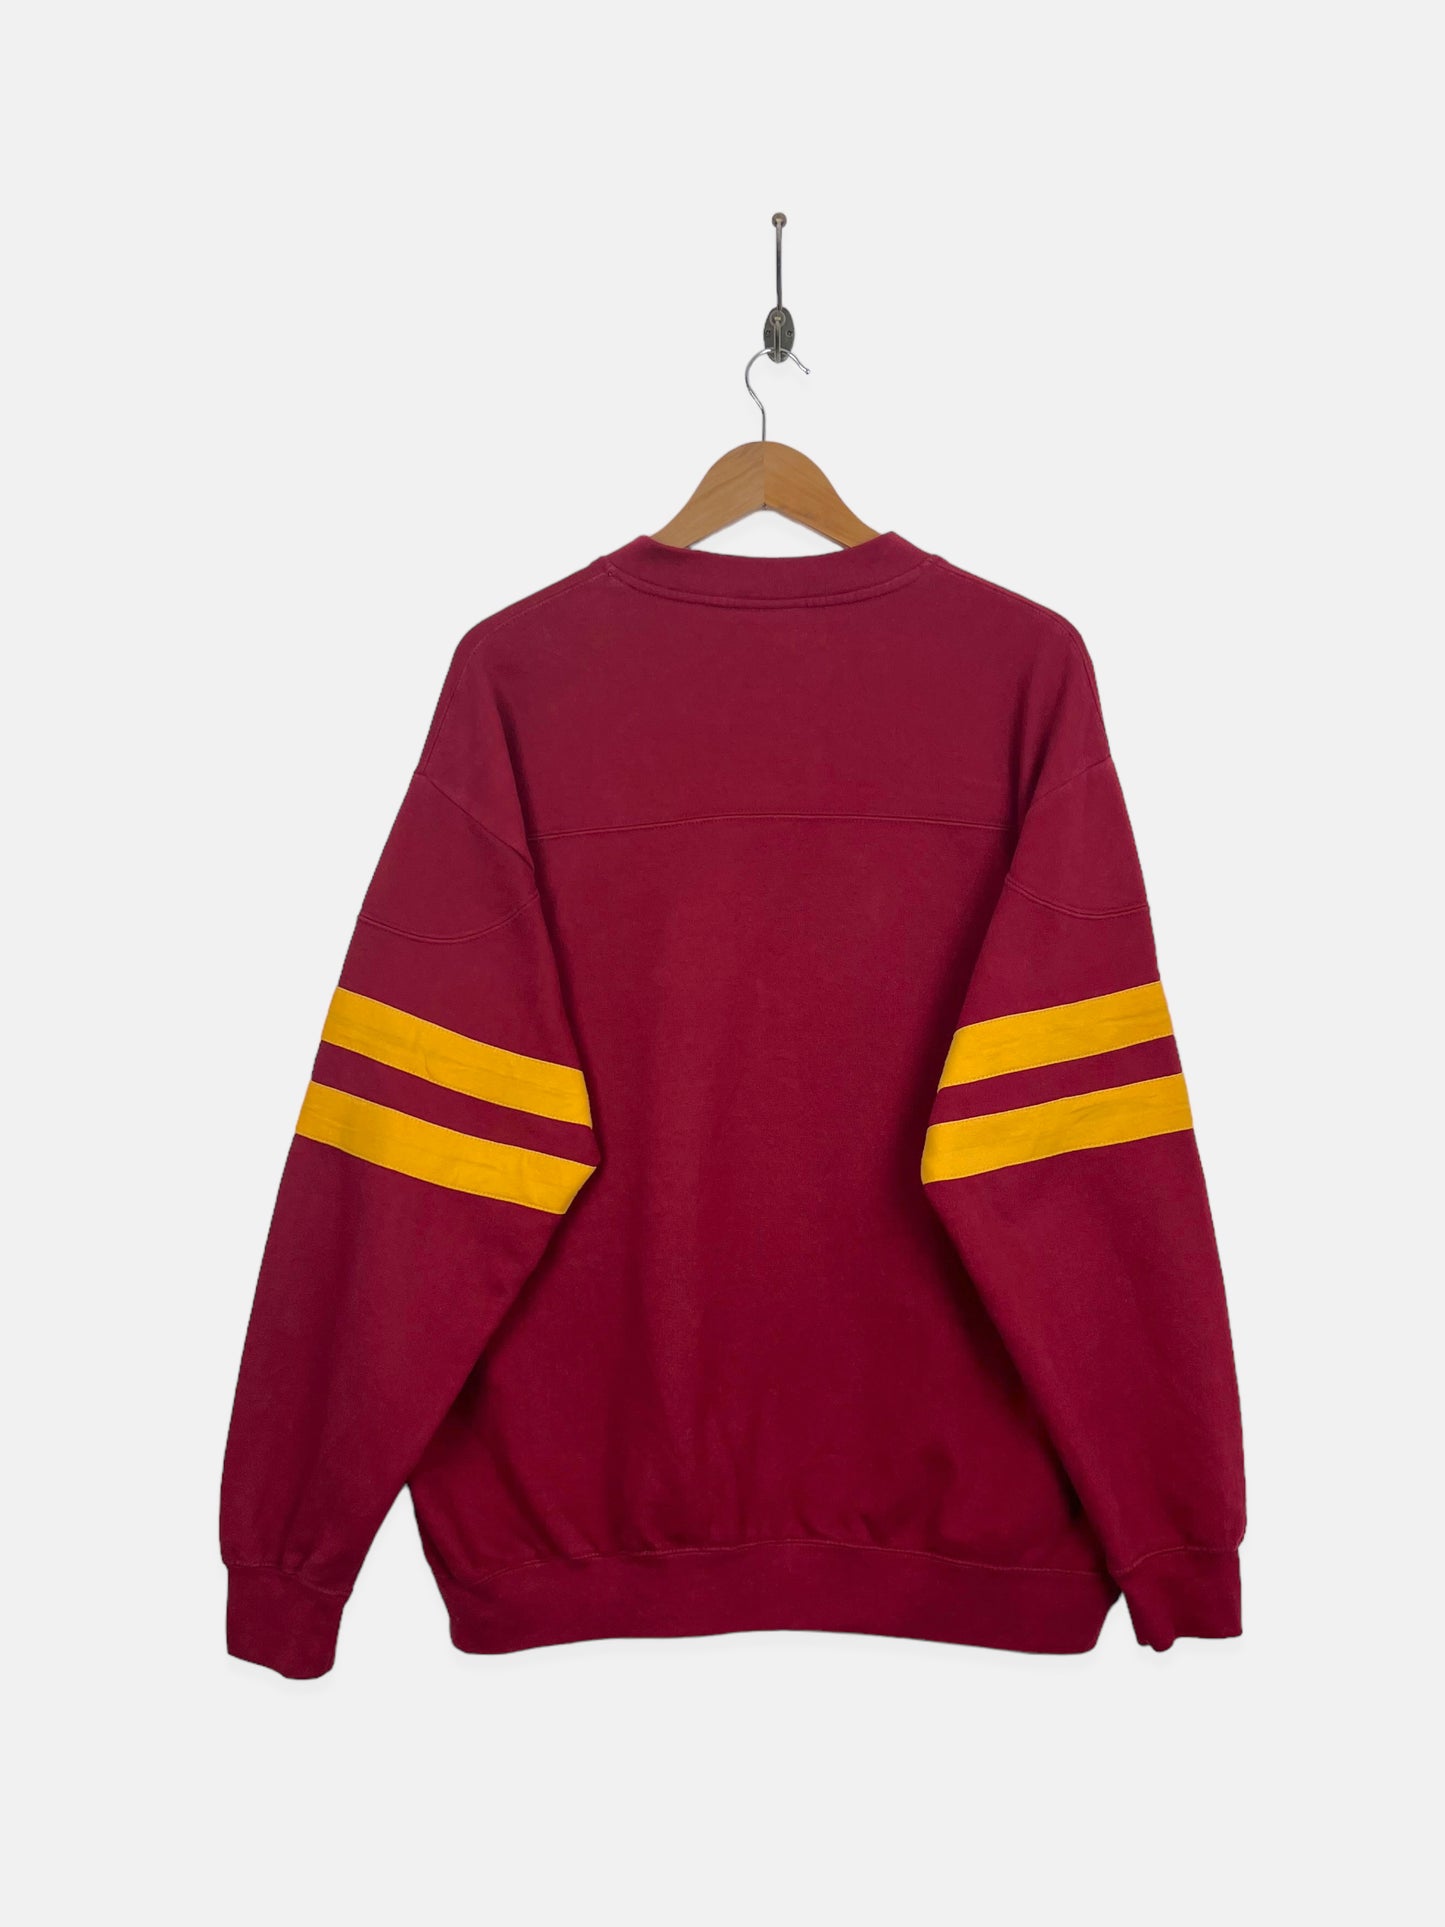 90's Washington Redskins NFL Vintage Sweatshirt Size L